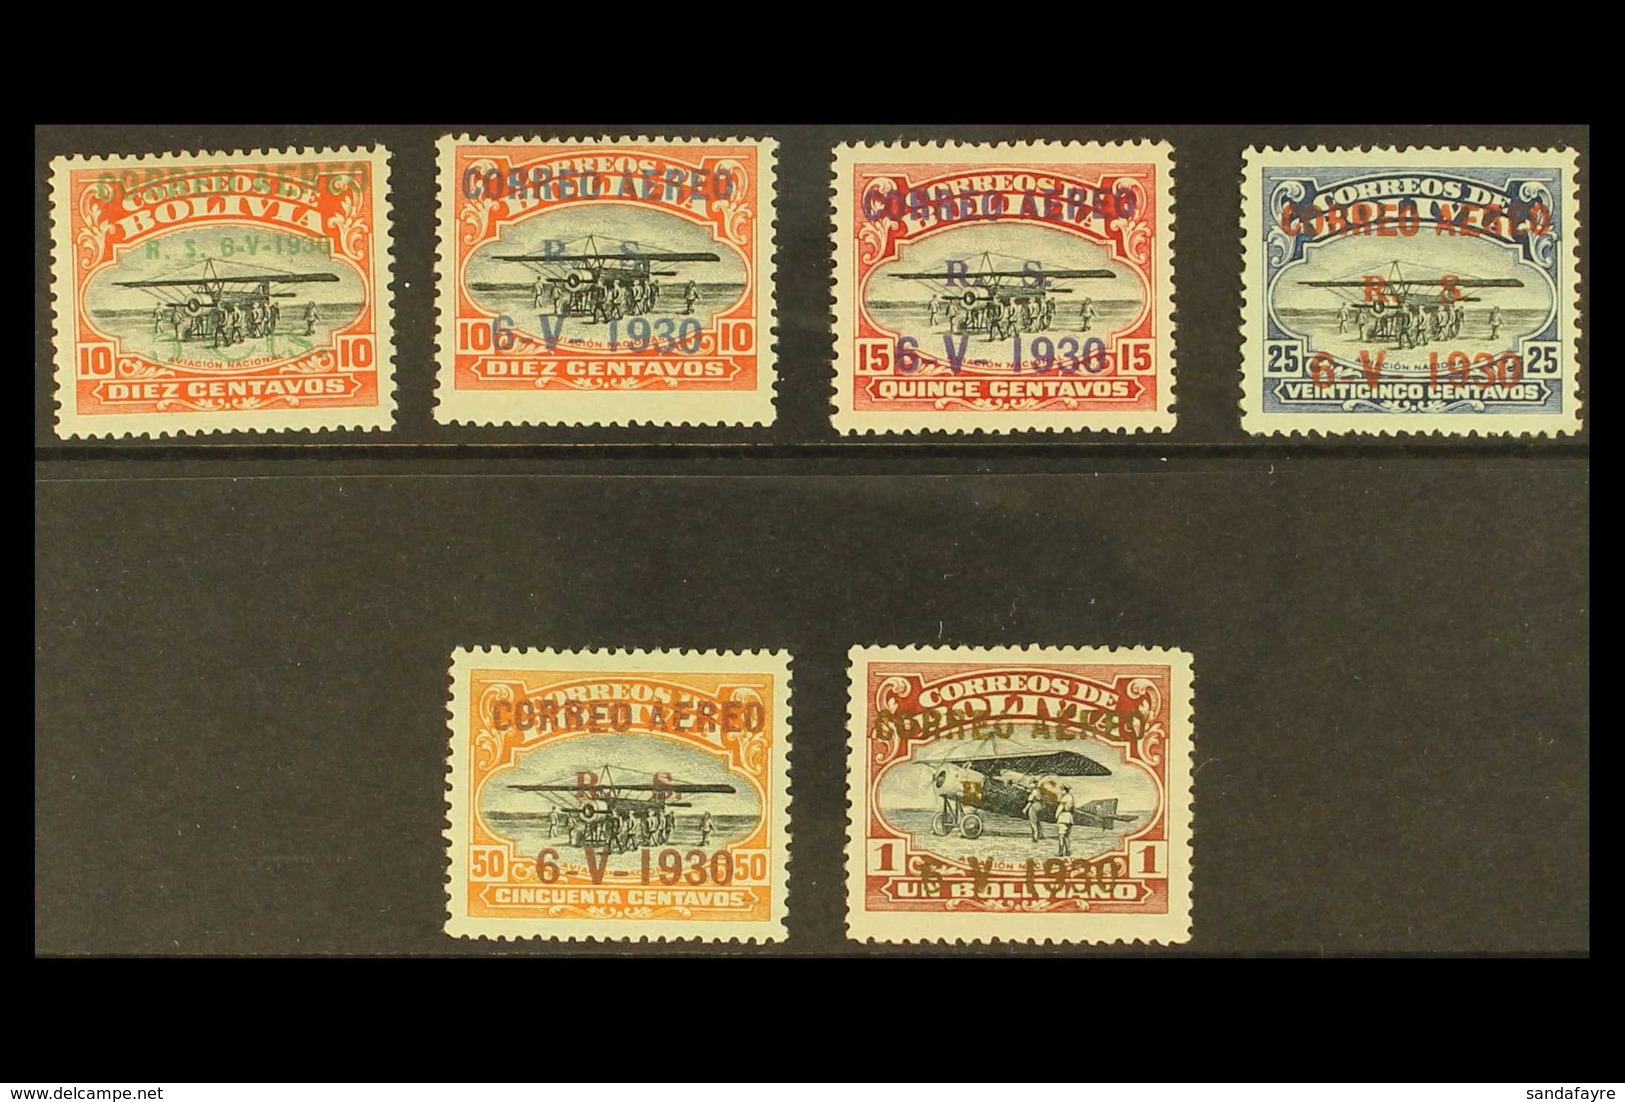 1930 Air "CORREO AEREO" Overprints Complete Basic Set (SG 228/35, Scott C11/12, C14/16 & C18), Very Fine Mint, Very Fres - Bolivie